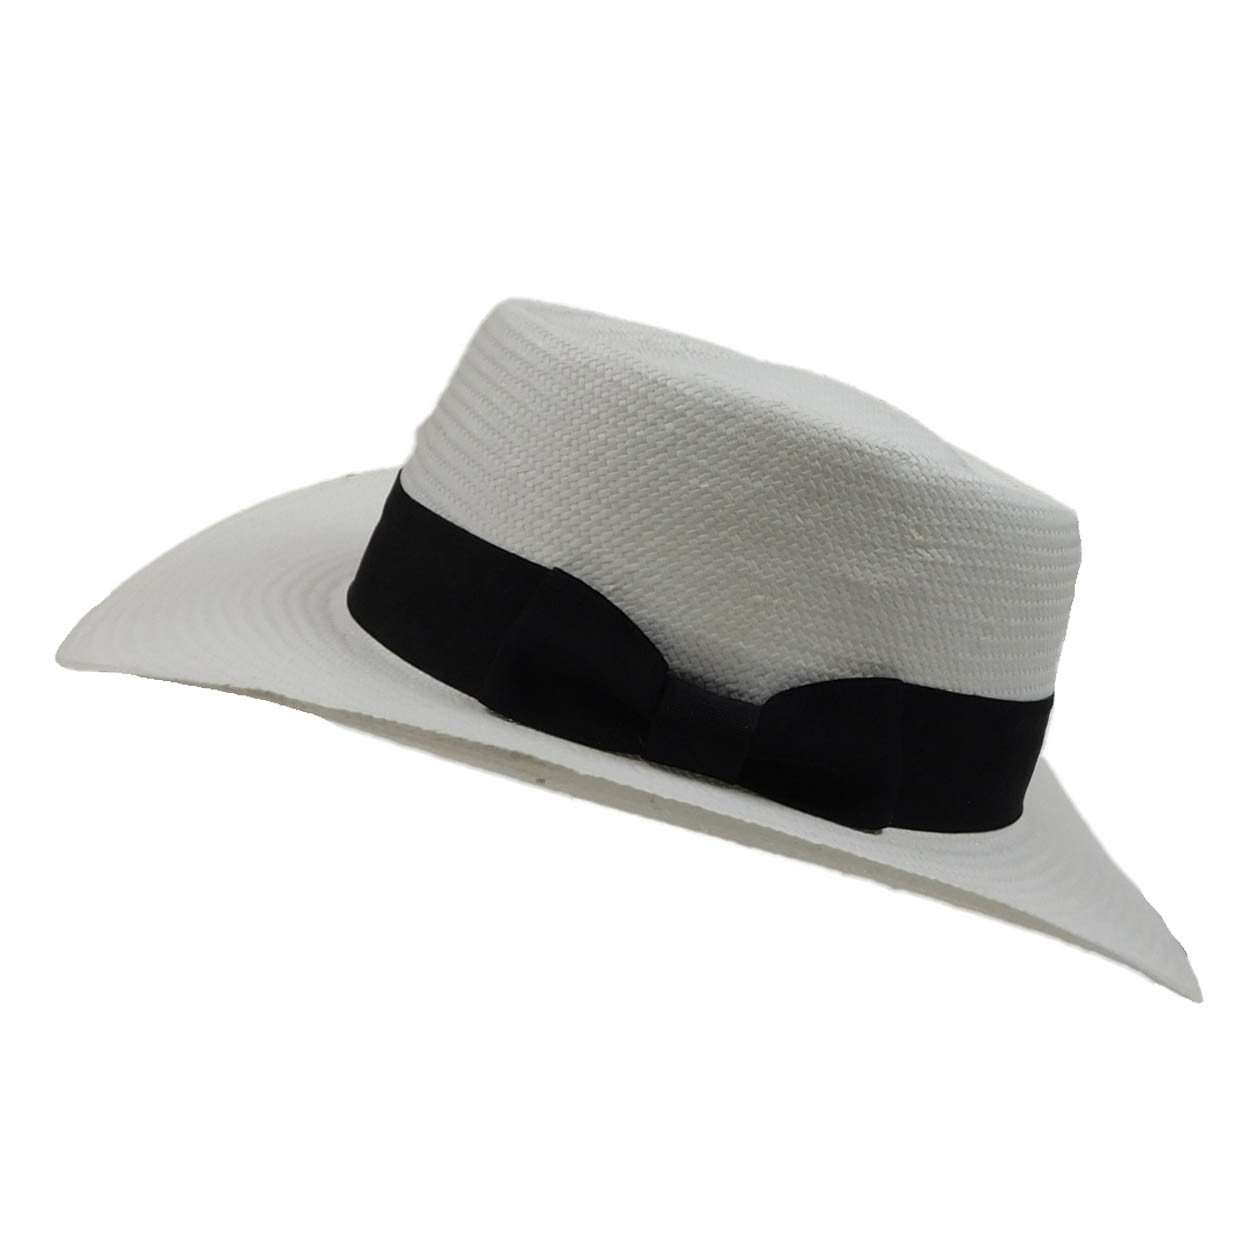 White Toyo Gambler Golf Hat by Kenny Keith Gambler Hat Great hats by Karen Keith    